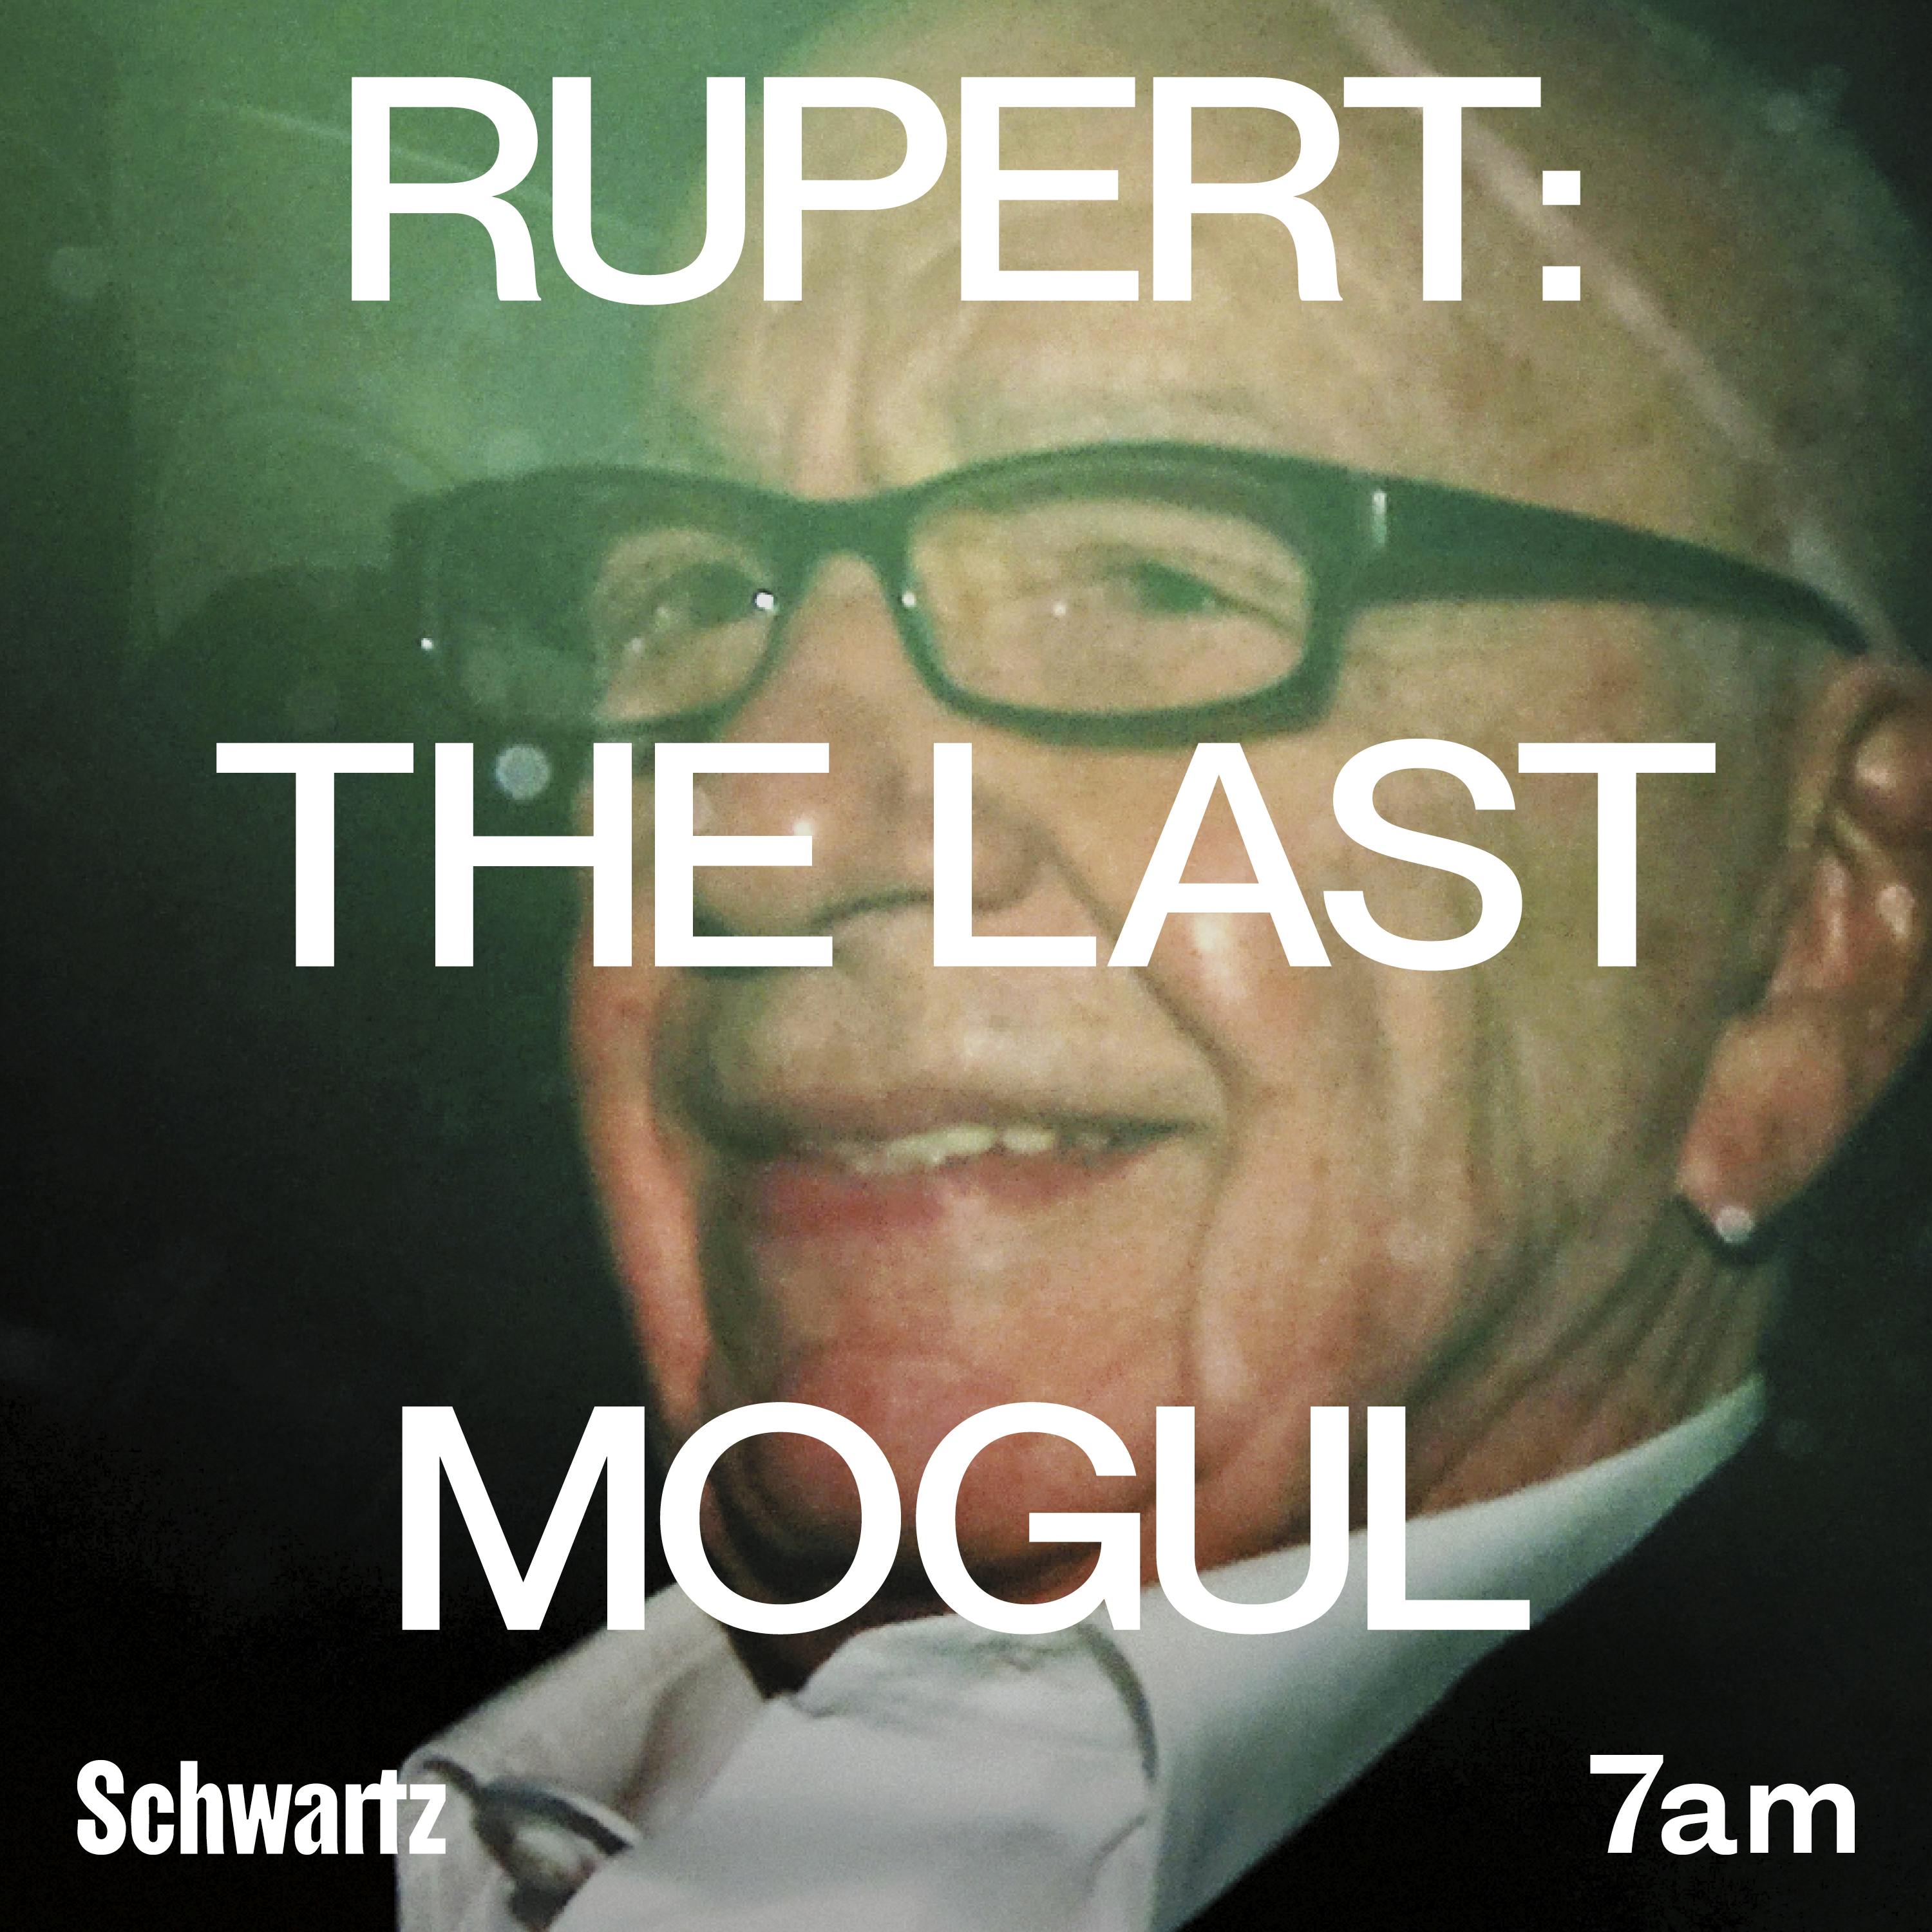 Rupert: The last mogul: Next in line